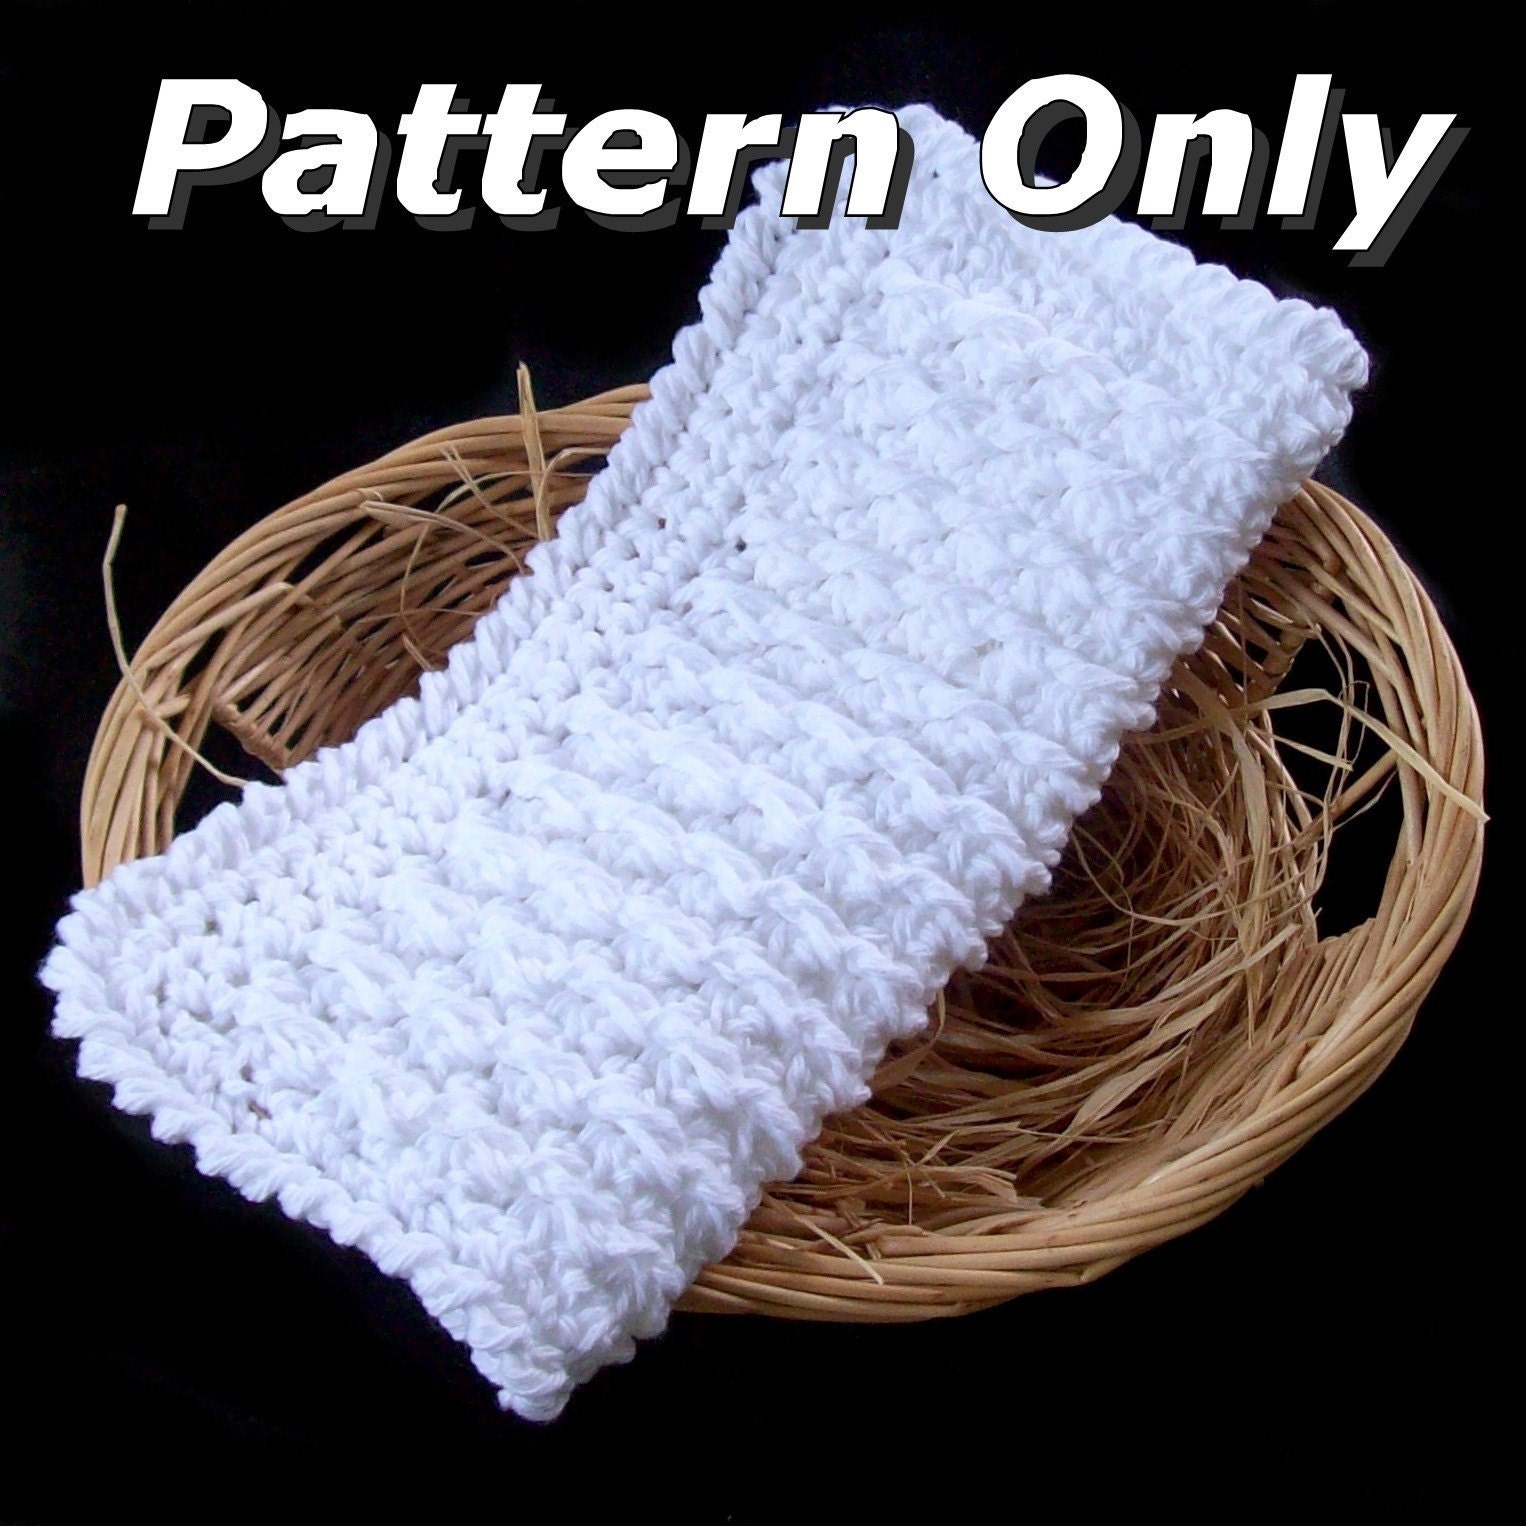 Crochet Dish Cloth | Free Crochet Pattern